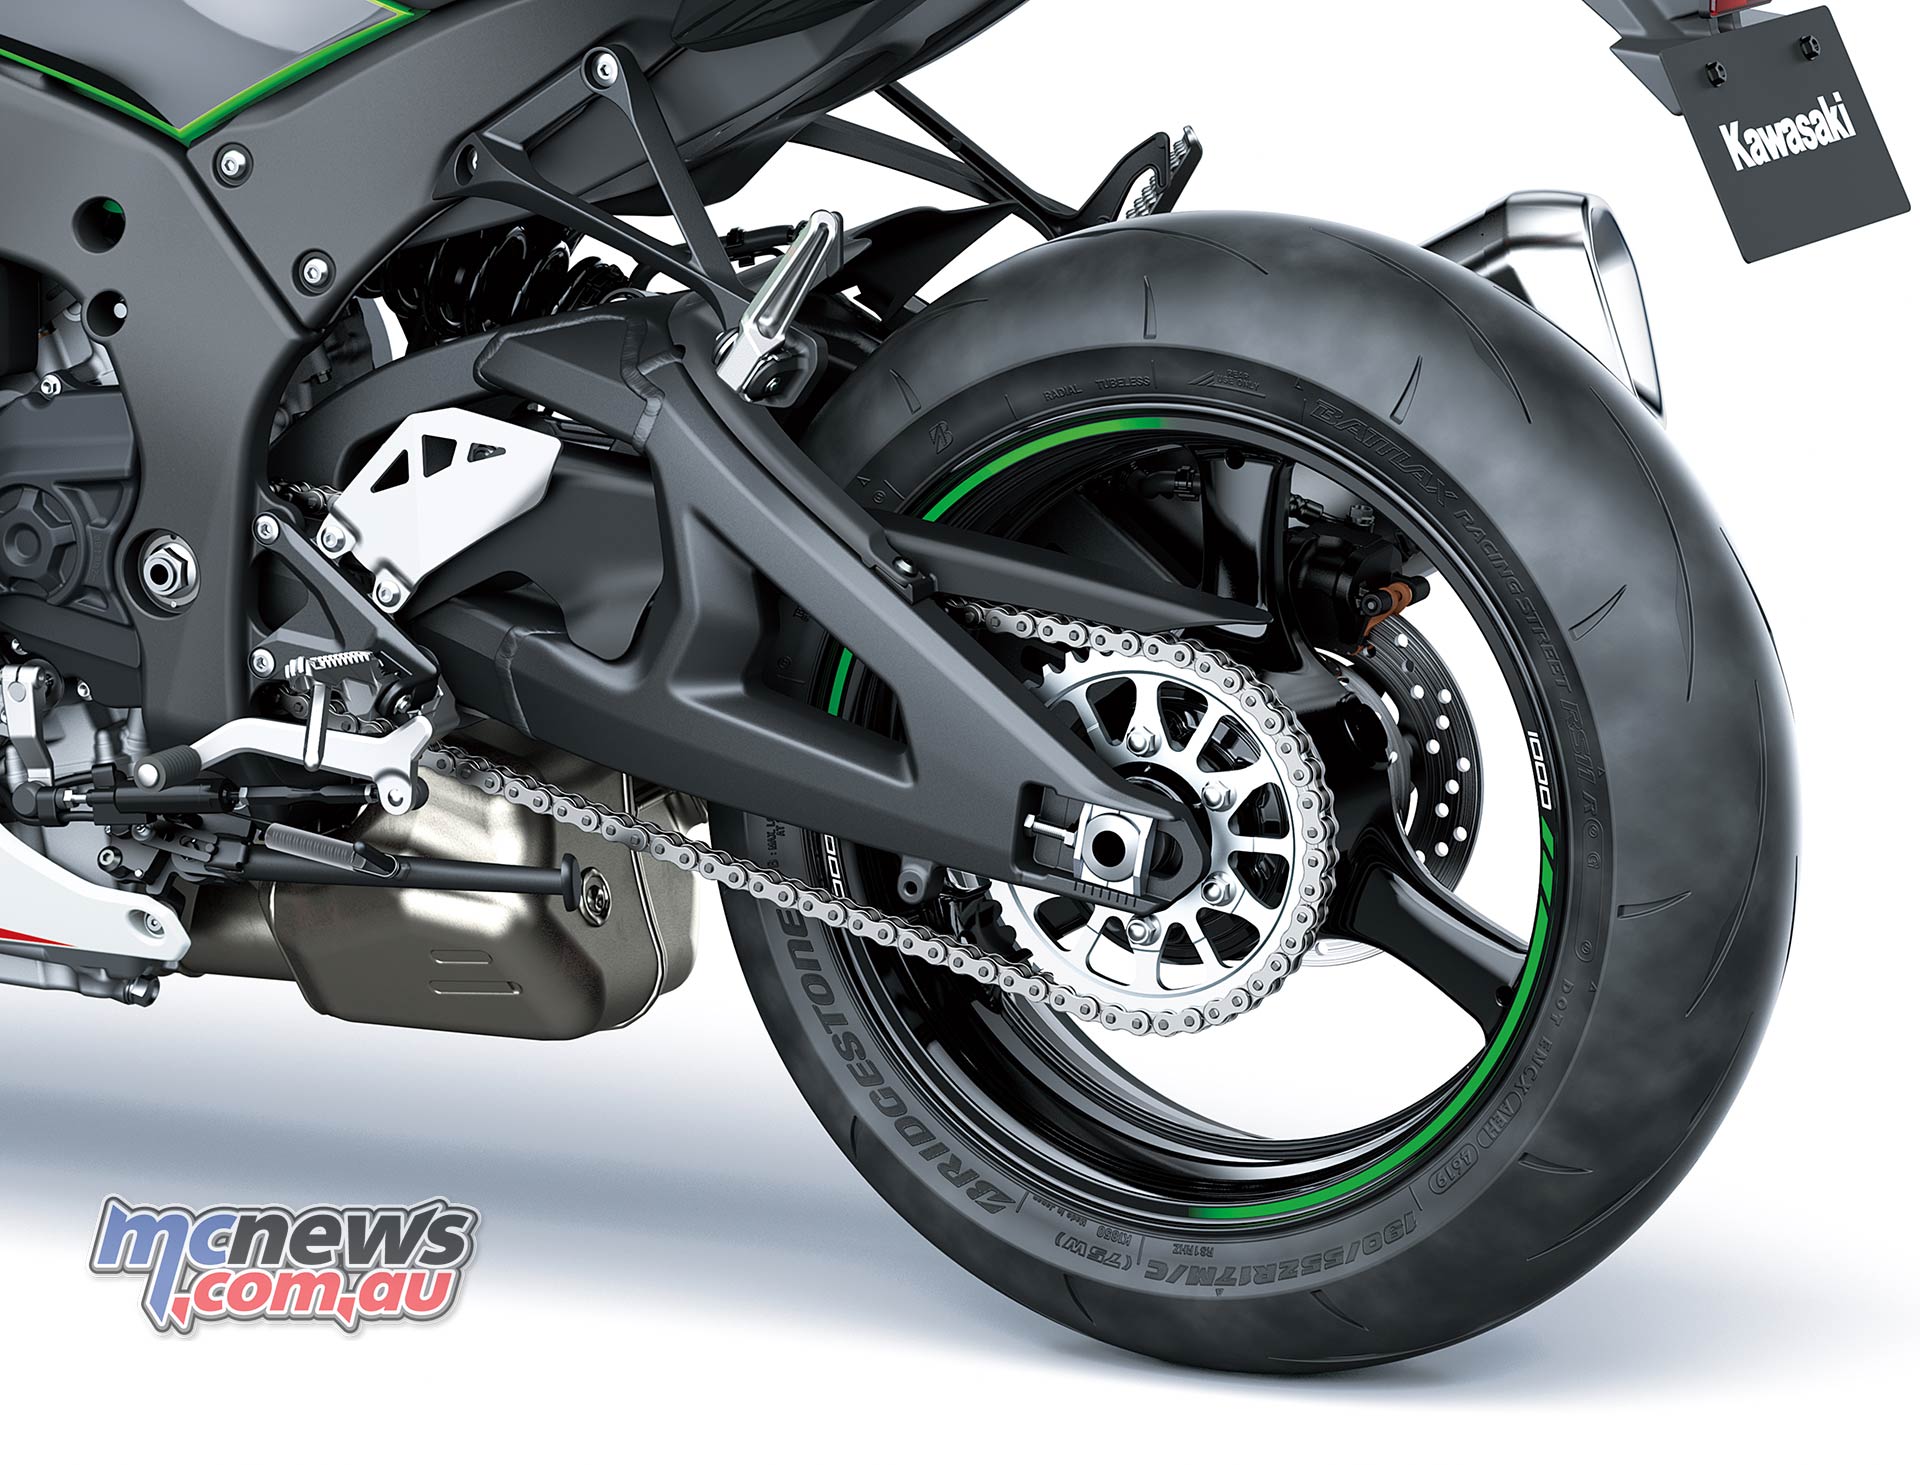 2021 Kawasaki Ninja and chassis updates | MCNews